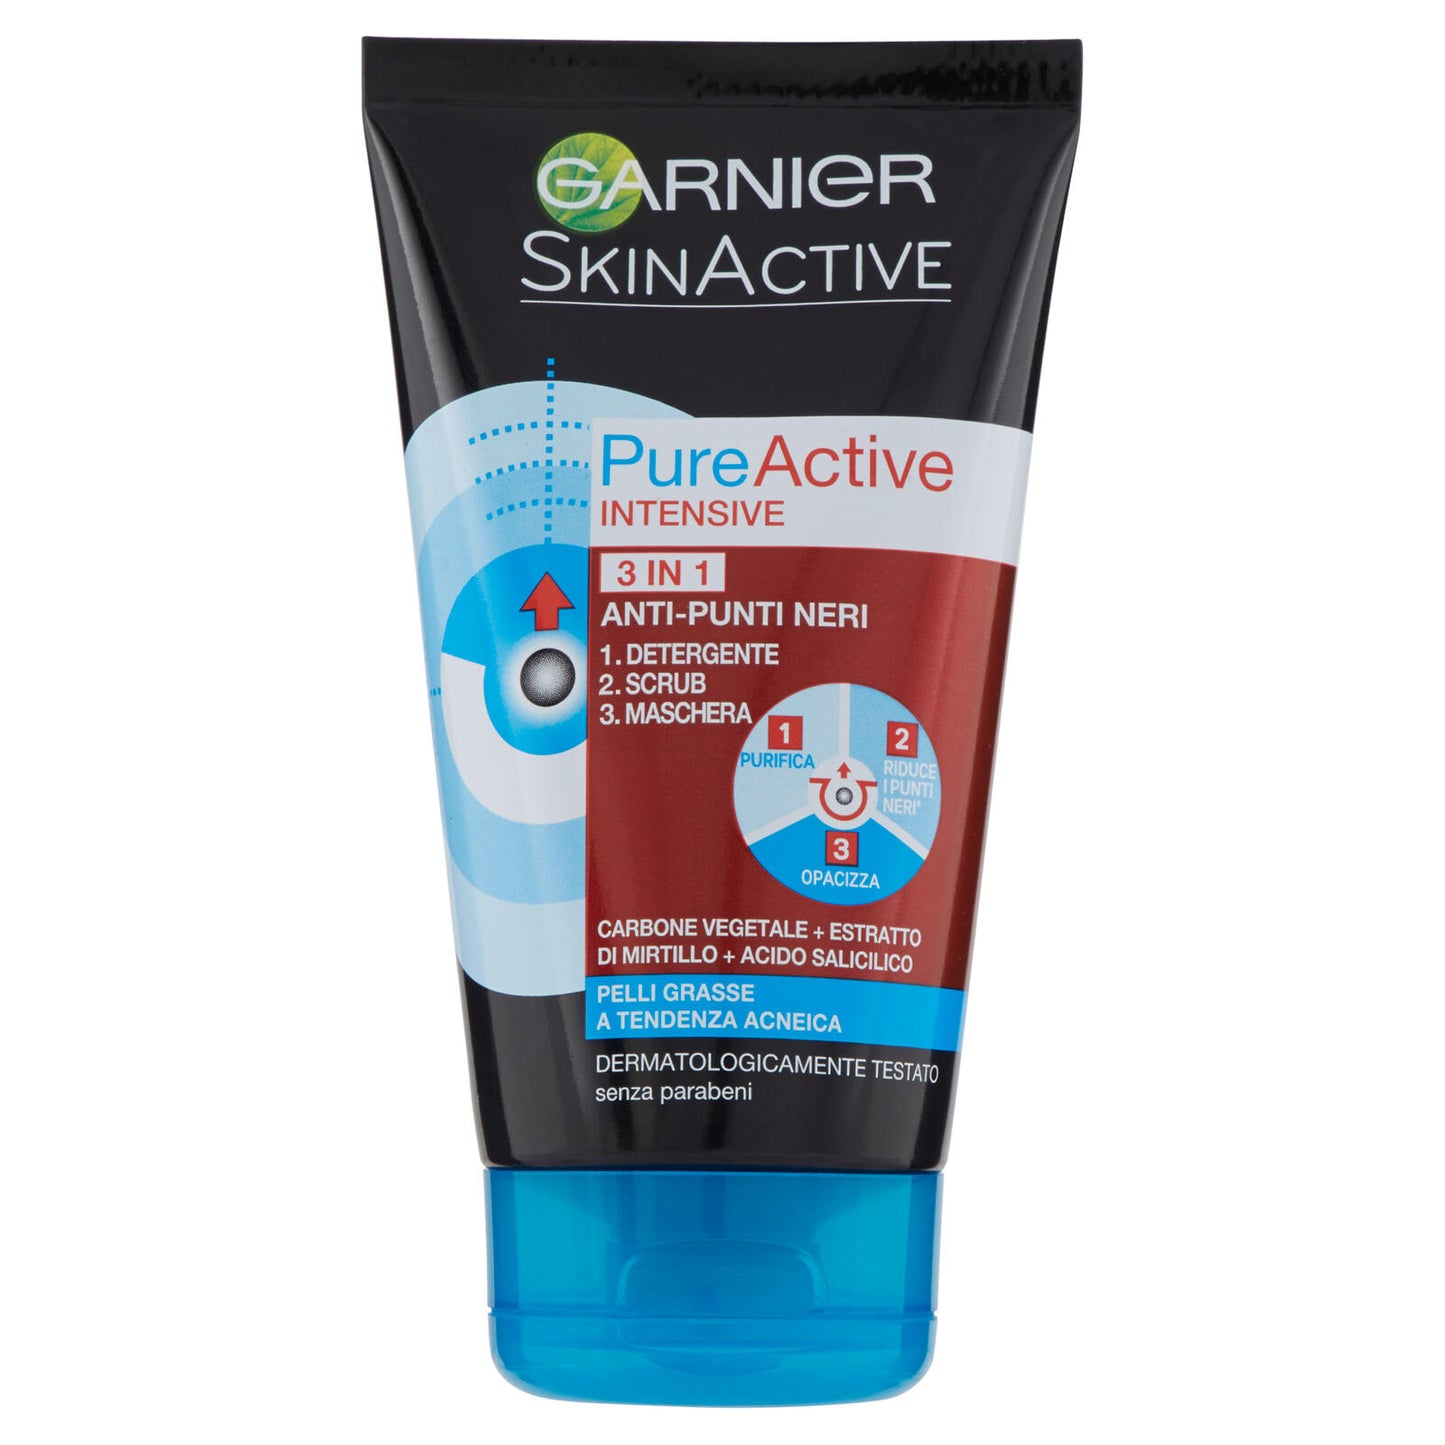 Garnier PureActive Intense - 3in1 anti-punti neri - 150 ml